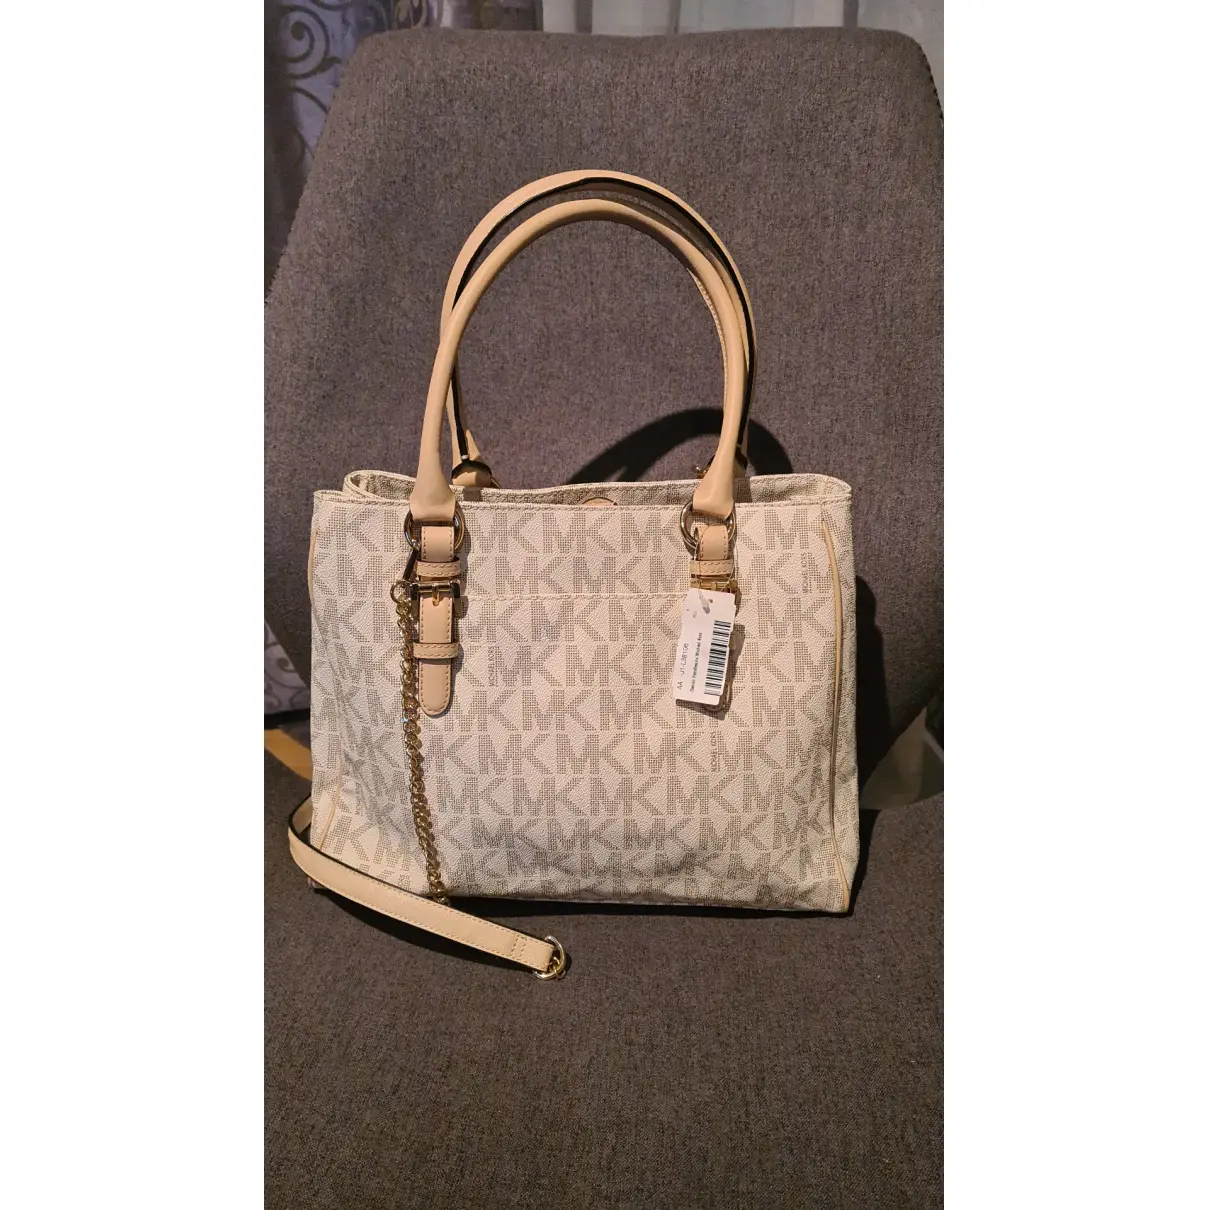 Buy Michael Kors Savannah leather handbag online